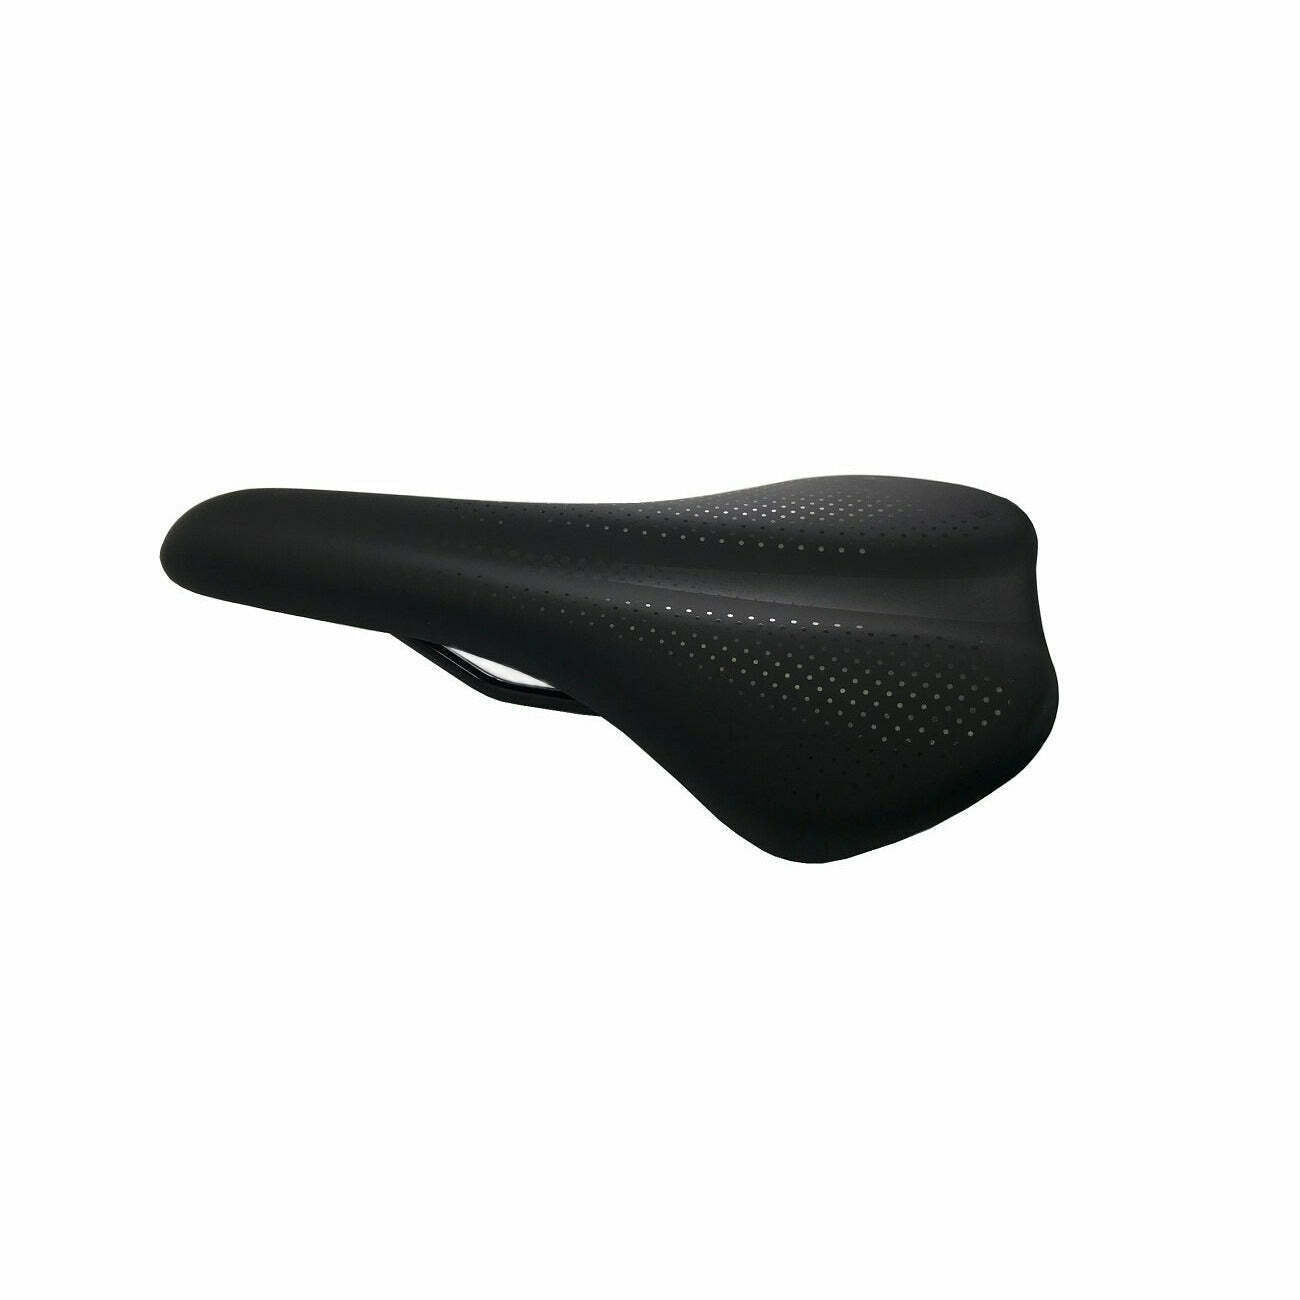 Performance Comp Bicycle Saddle Black Standard rails, compatible w/ standard seatposts